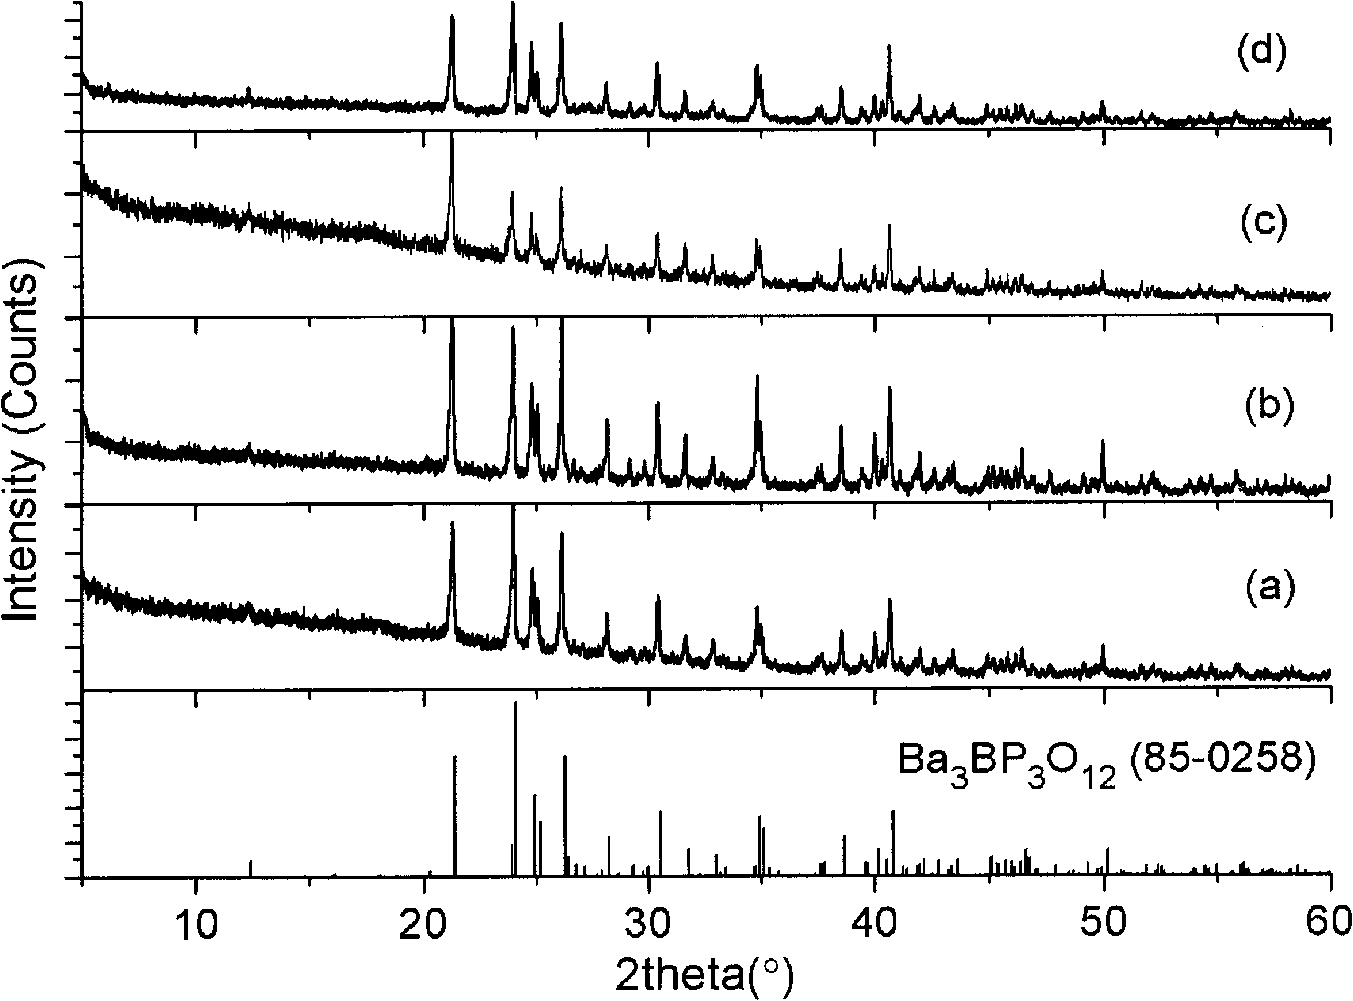 Ba3BP3O12 crystalloid, growing method and application thereof